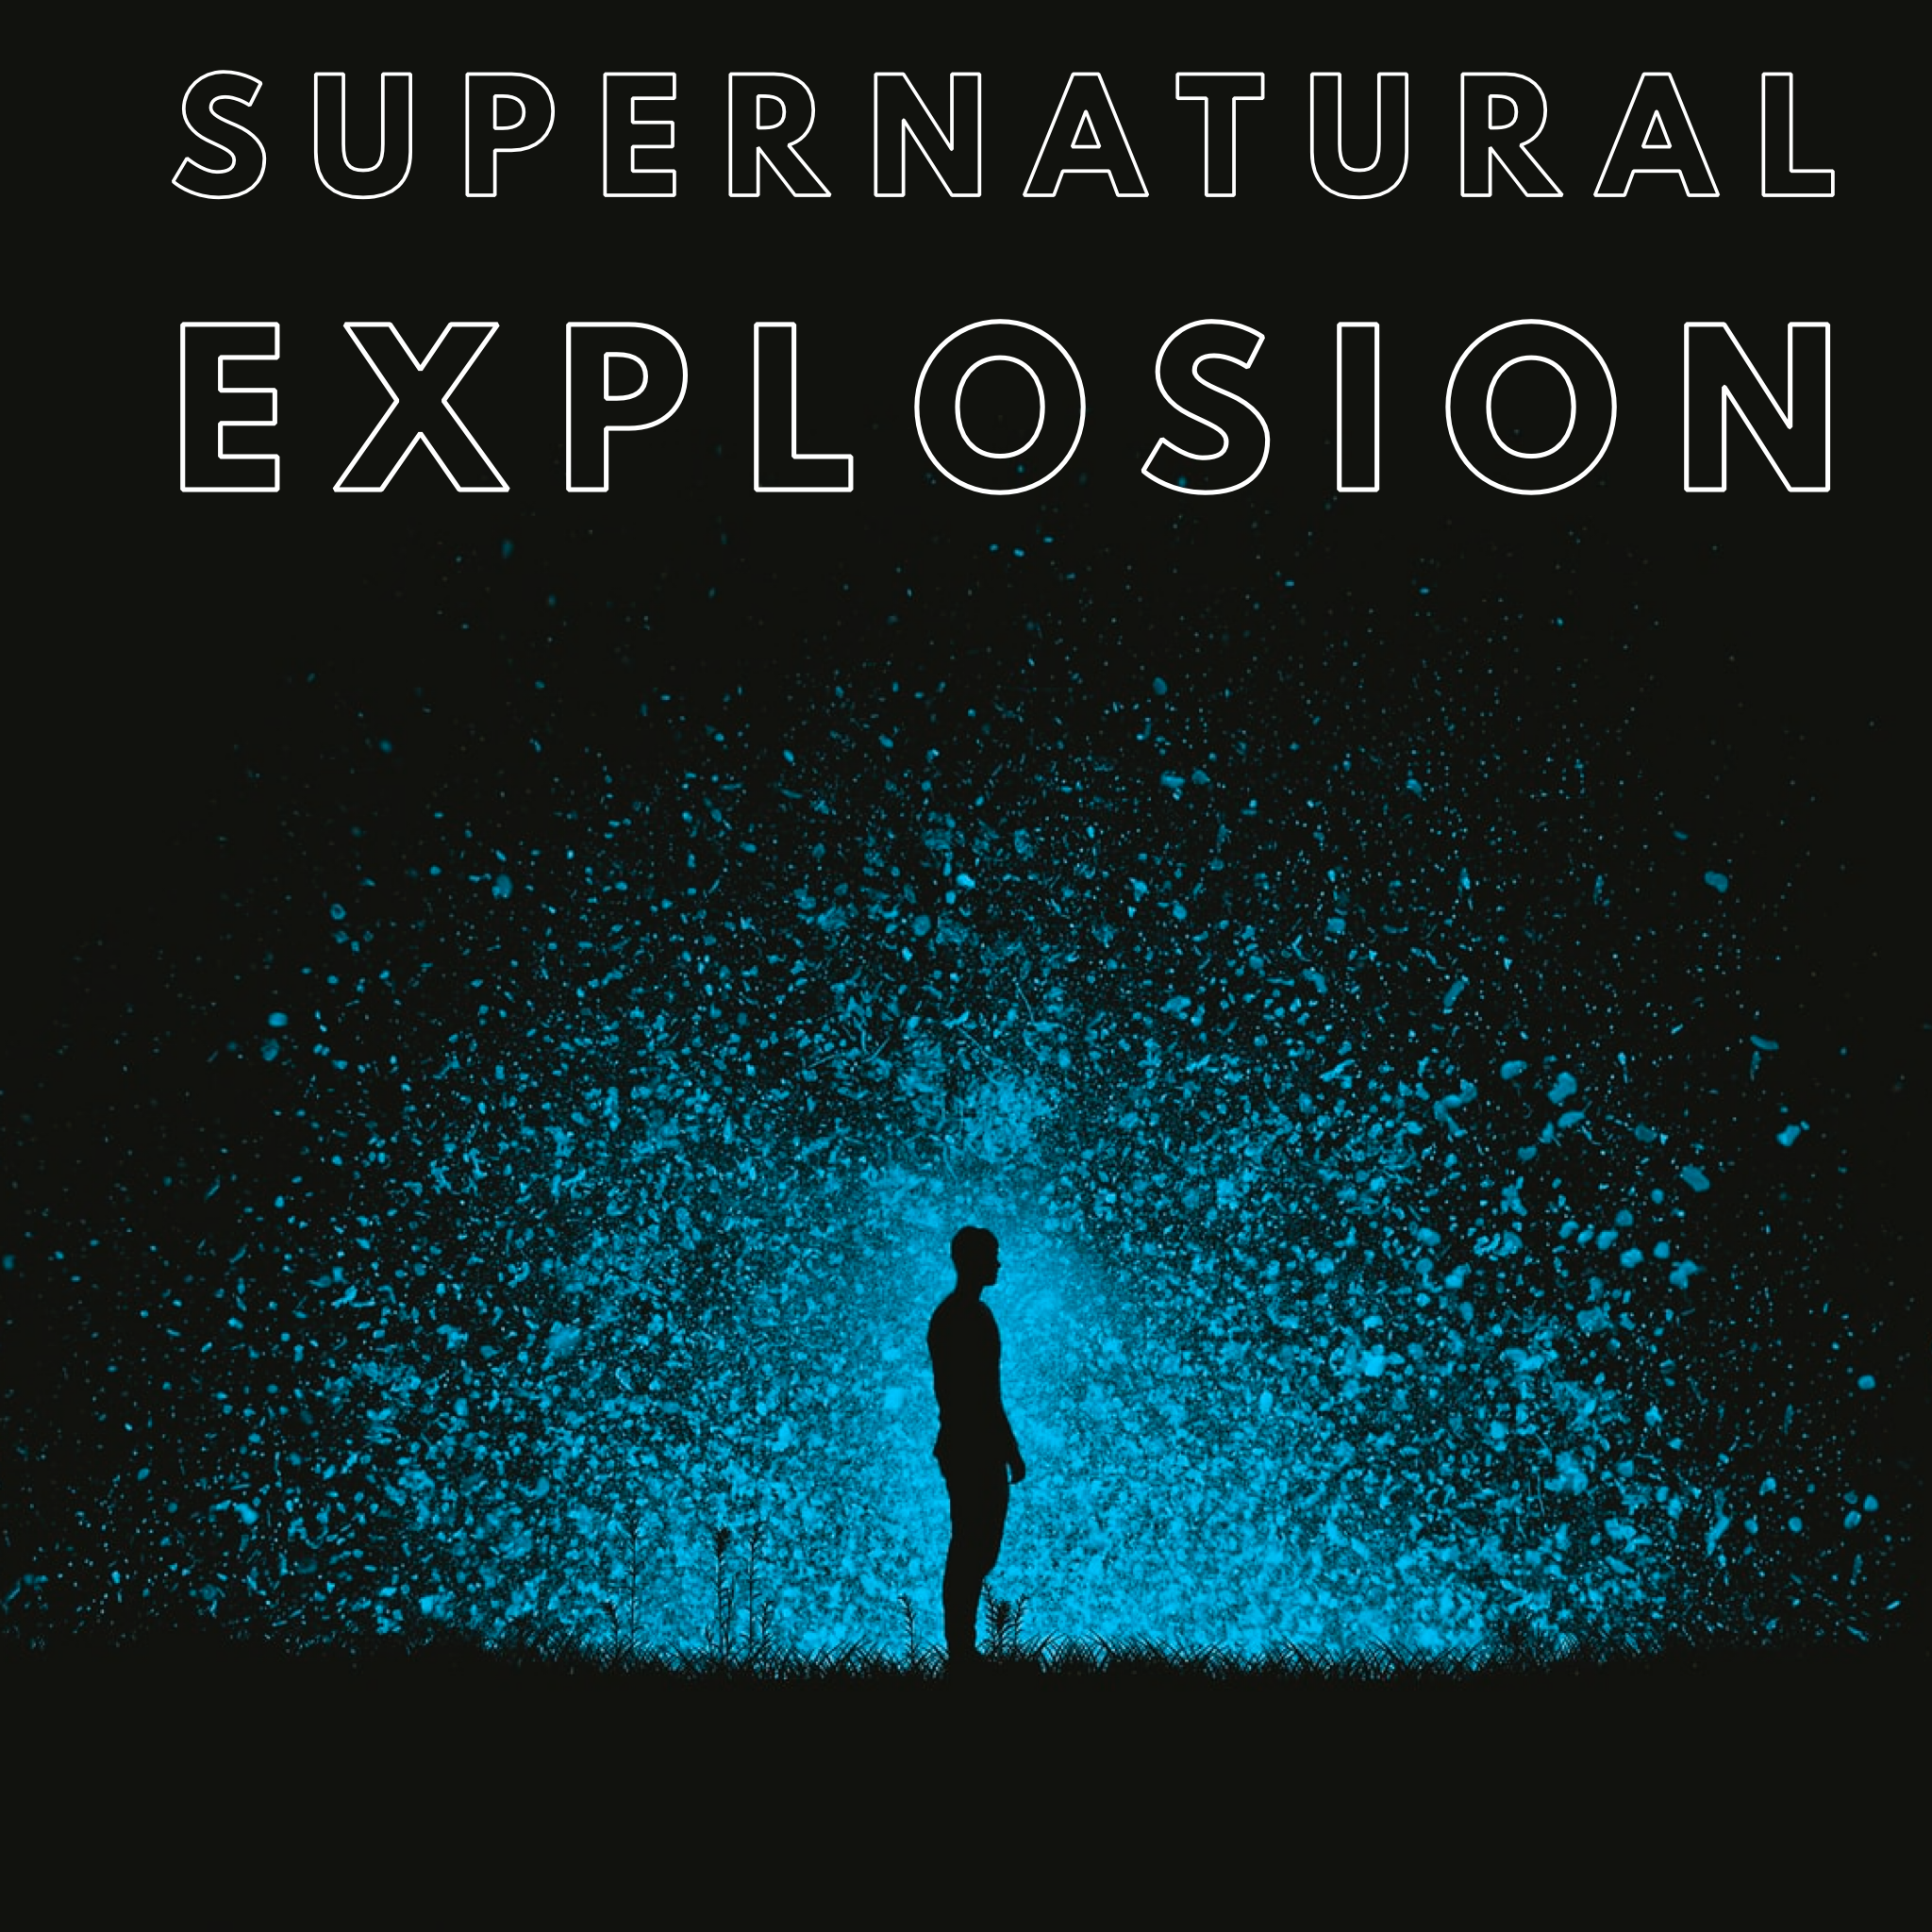 Supernatural Explosion - 10/4/20